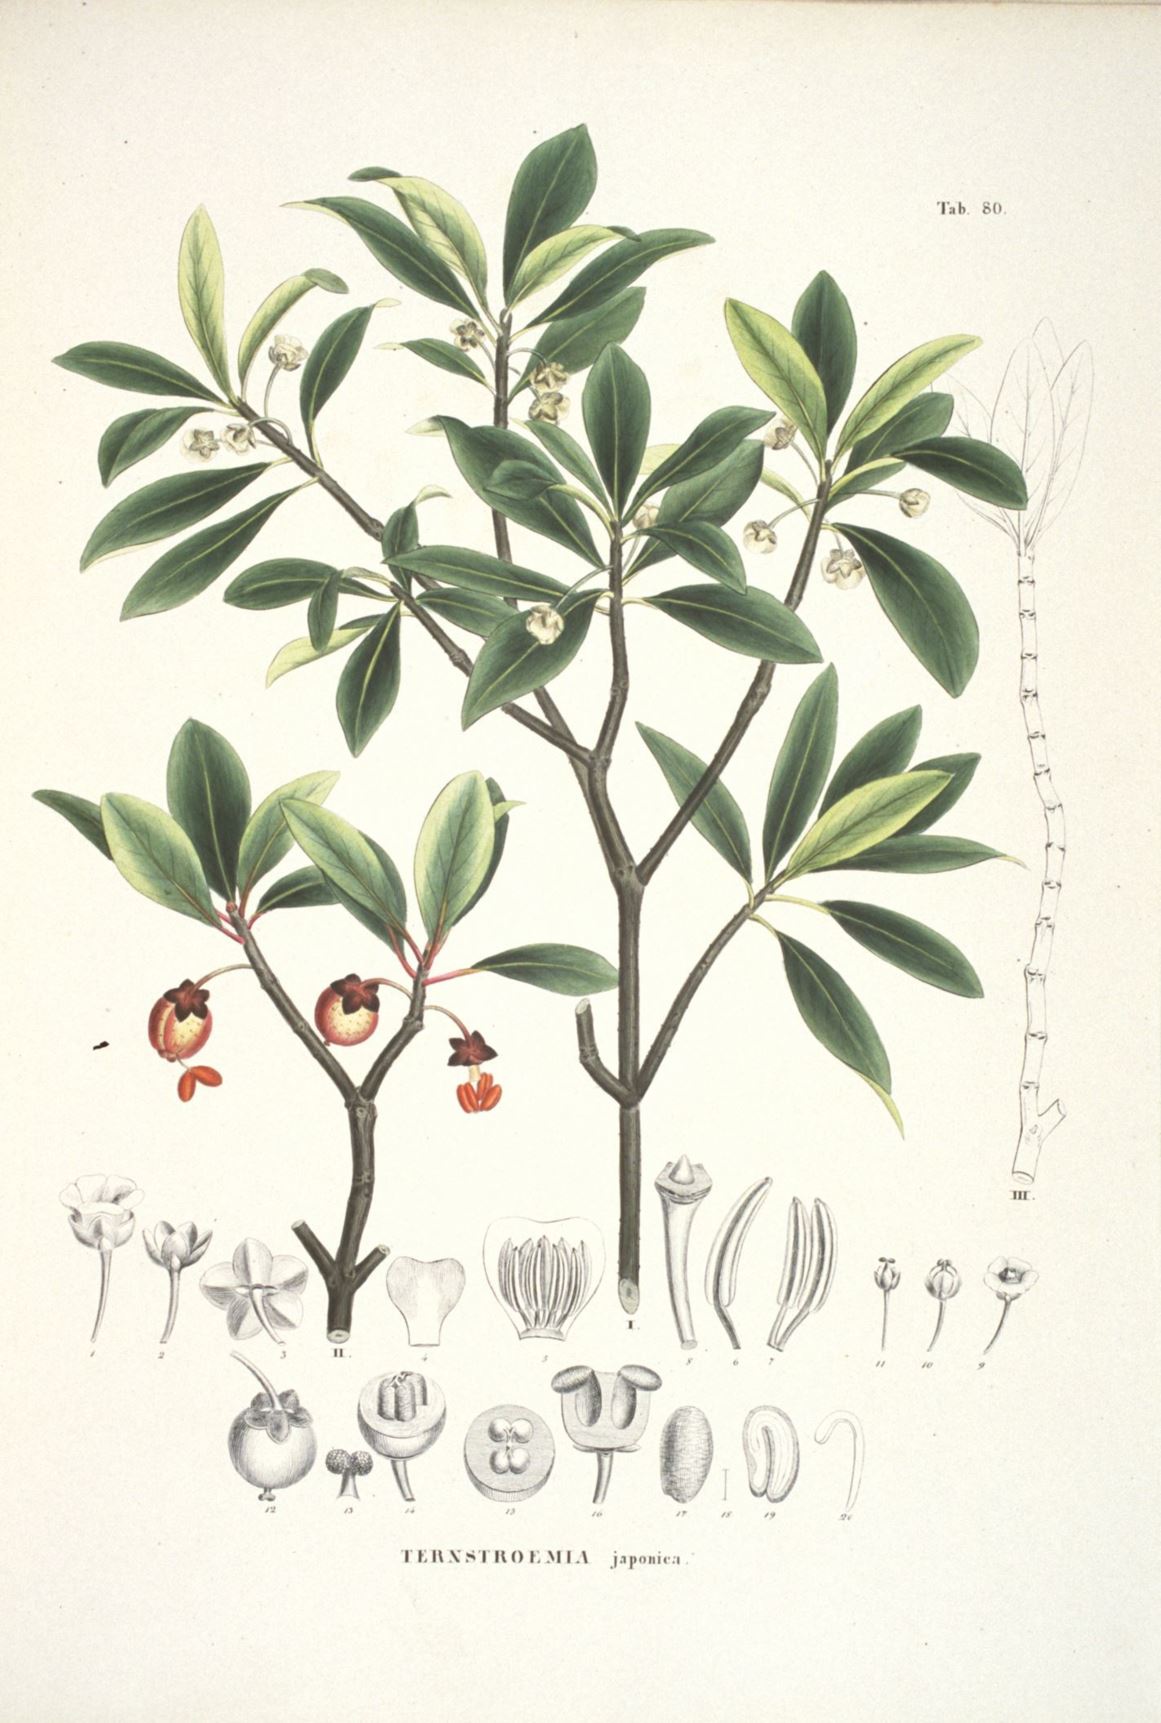 Cleyera japonica - Japanese cleyera, サカキ sakaki, 红淡比 hóng dàn bǐ